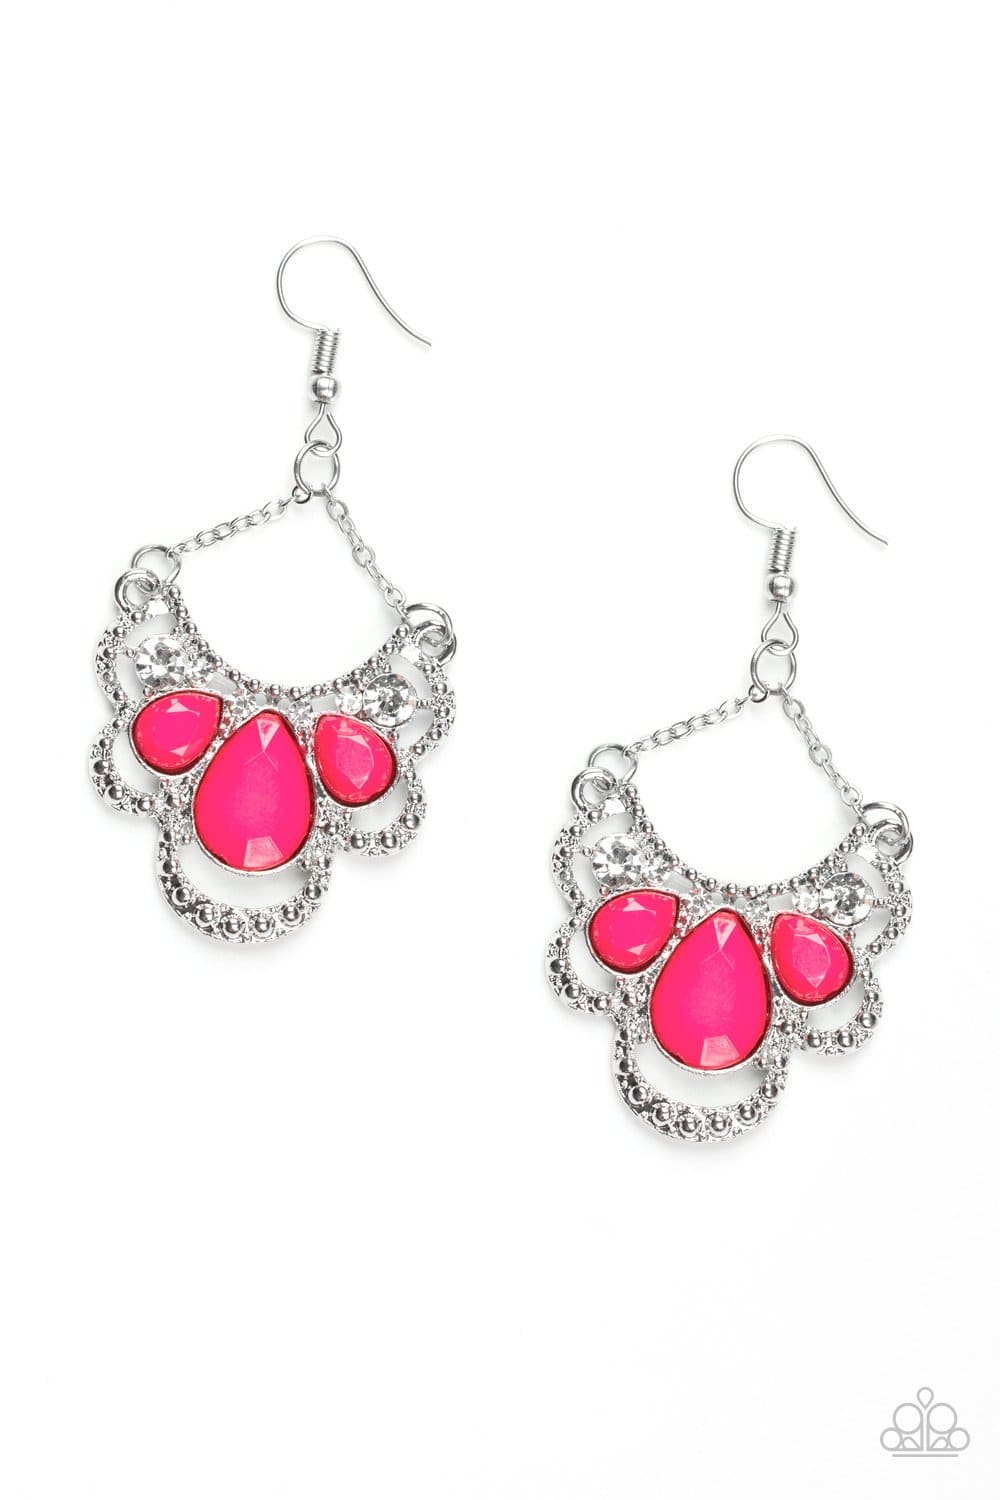 Caribbean Royalty - Pink Rhinestone Earrings - Paparazzi Accessories - GlaMarous Titi Jewels